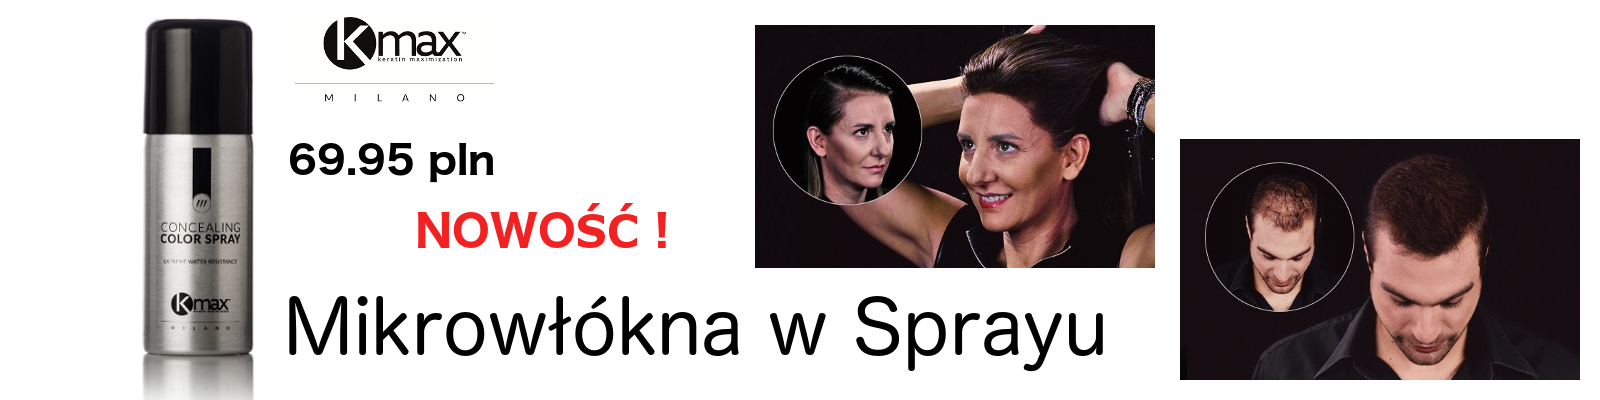 mikrowlokna_spray_kmax